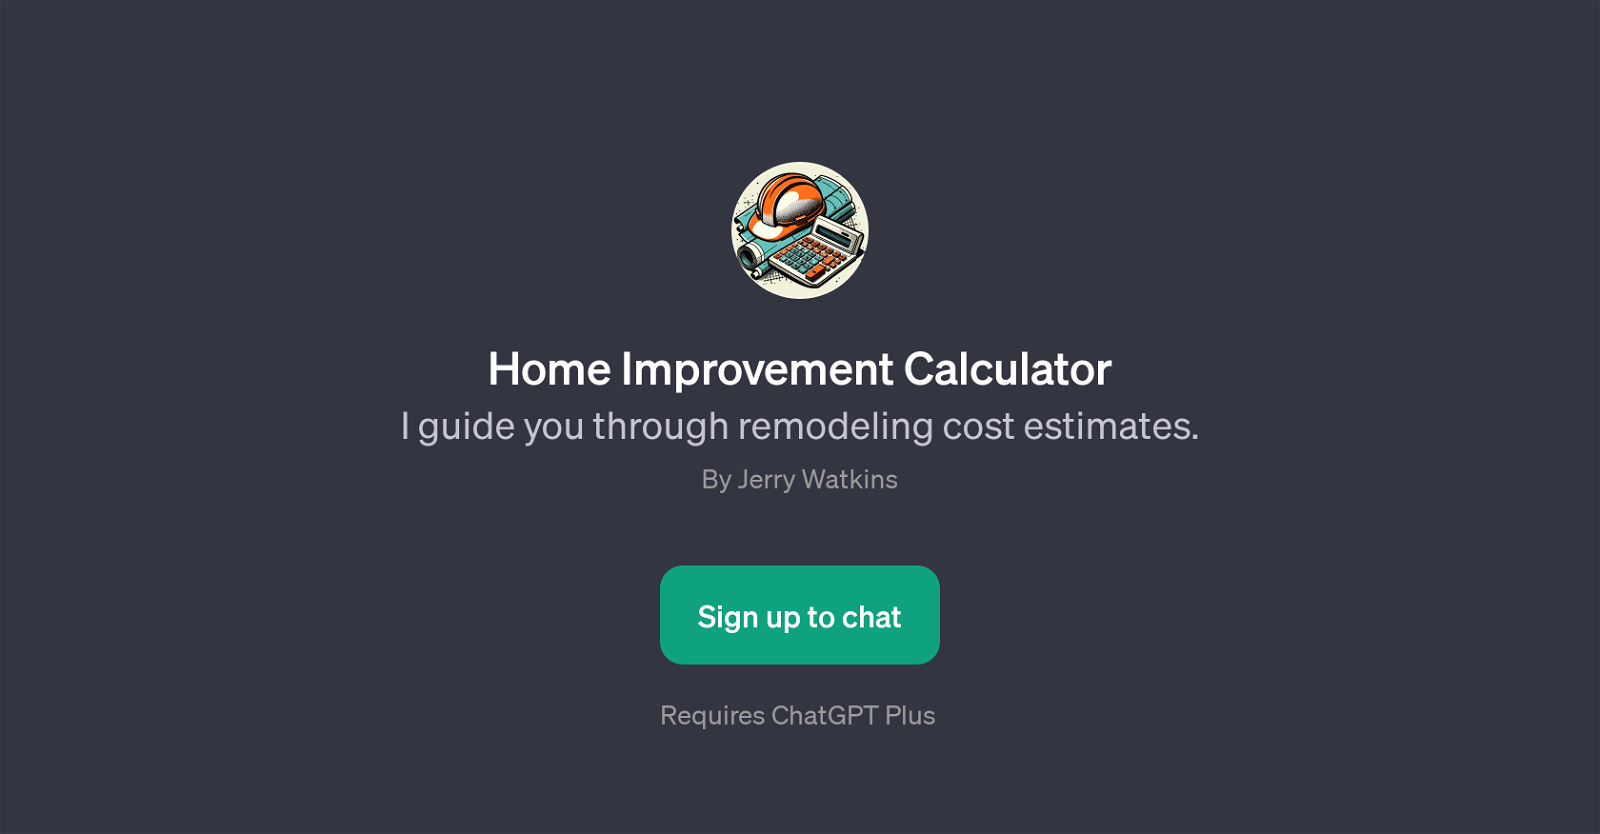 Home Improvement Calculator website